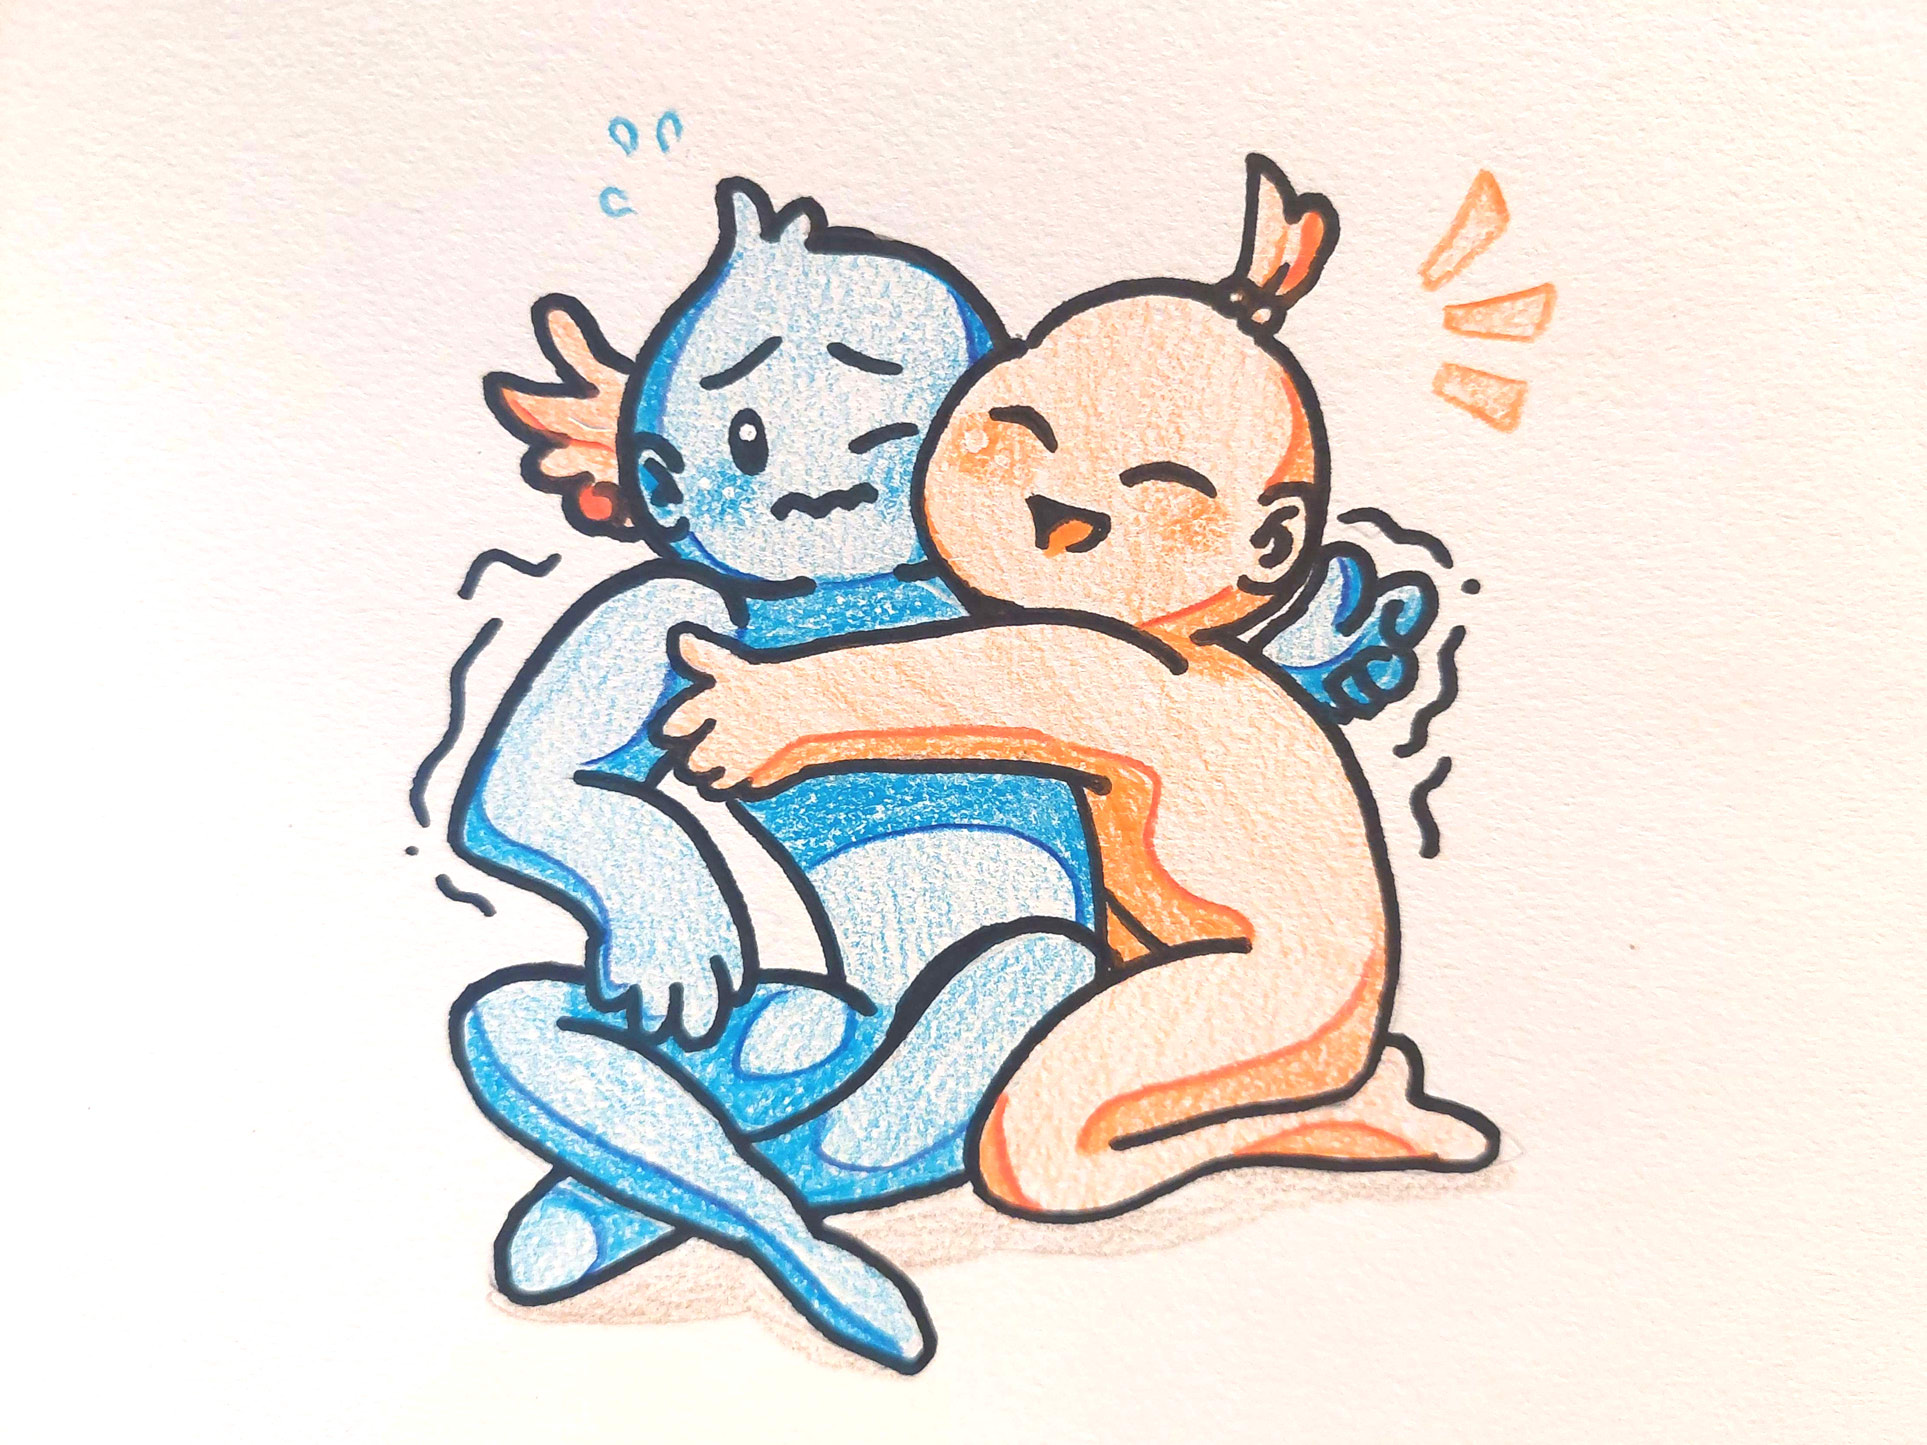 An awkward hug, illustration by Sie Douglas-Fish.